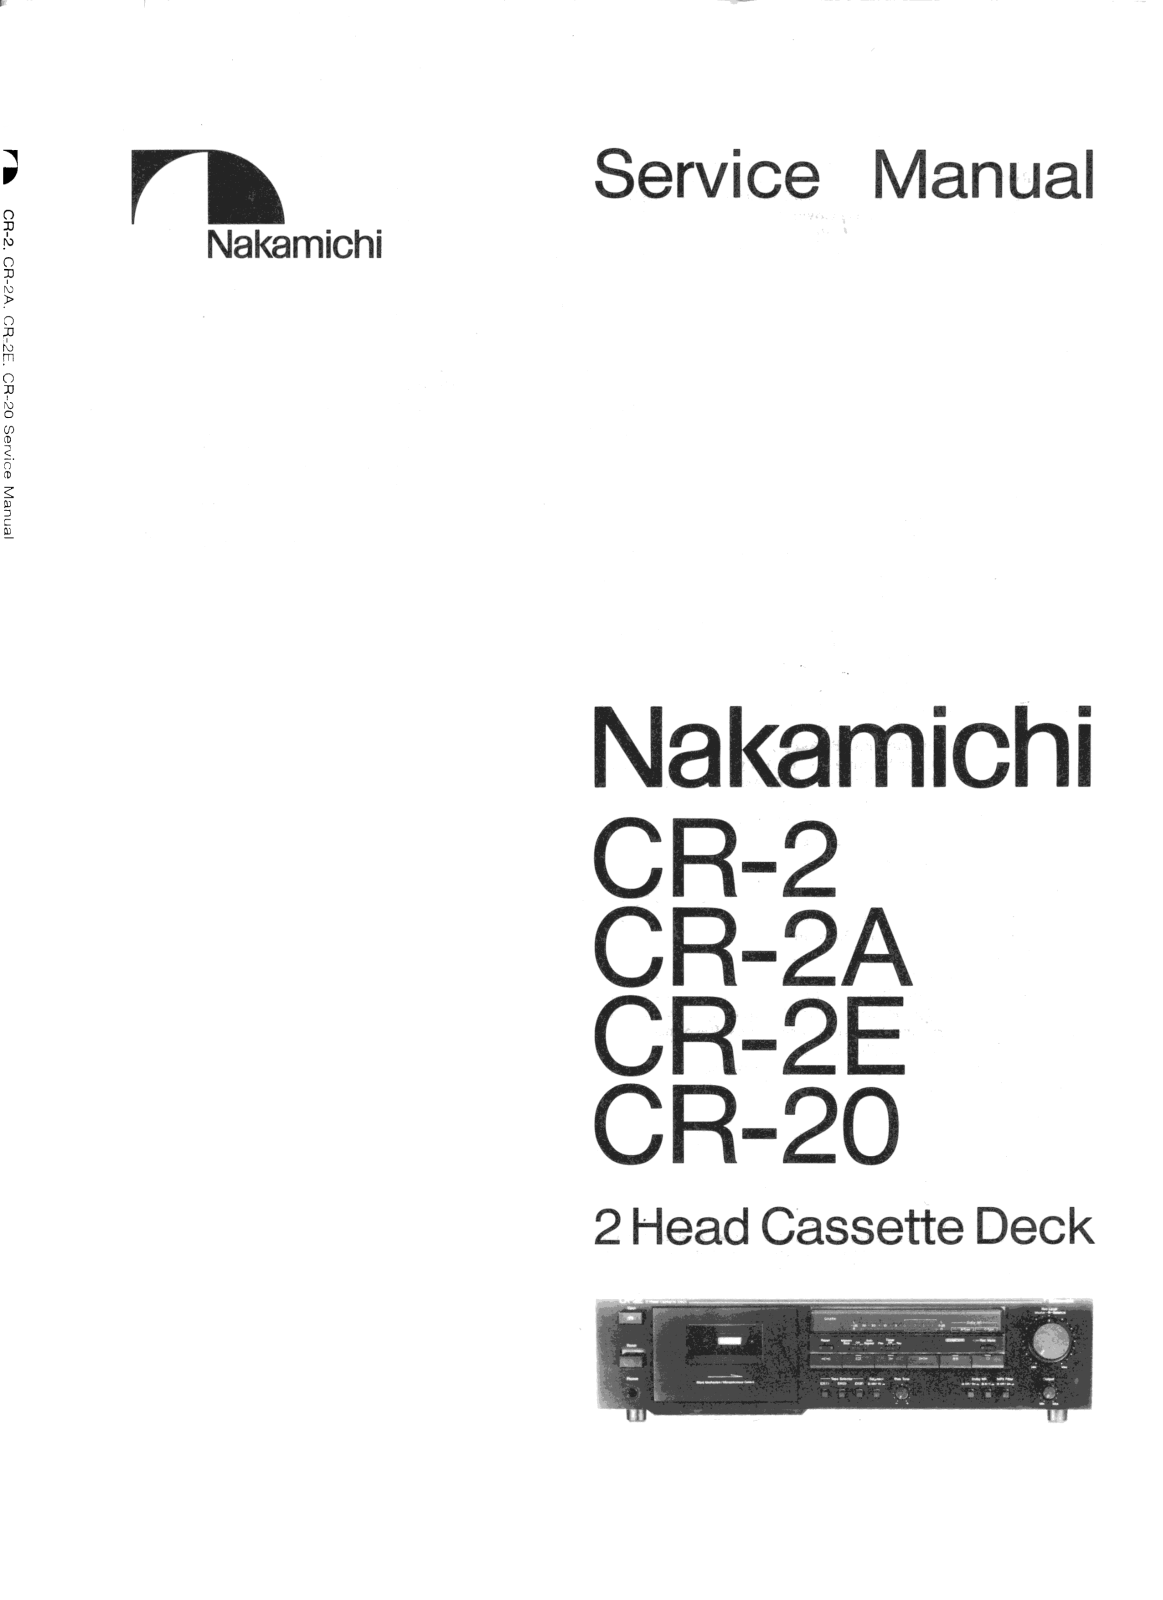 Nakamichi CR-2, CR-2-A, CR-2-E, CR-20 Service manual